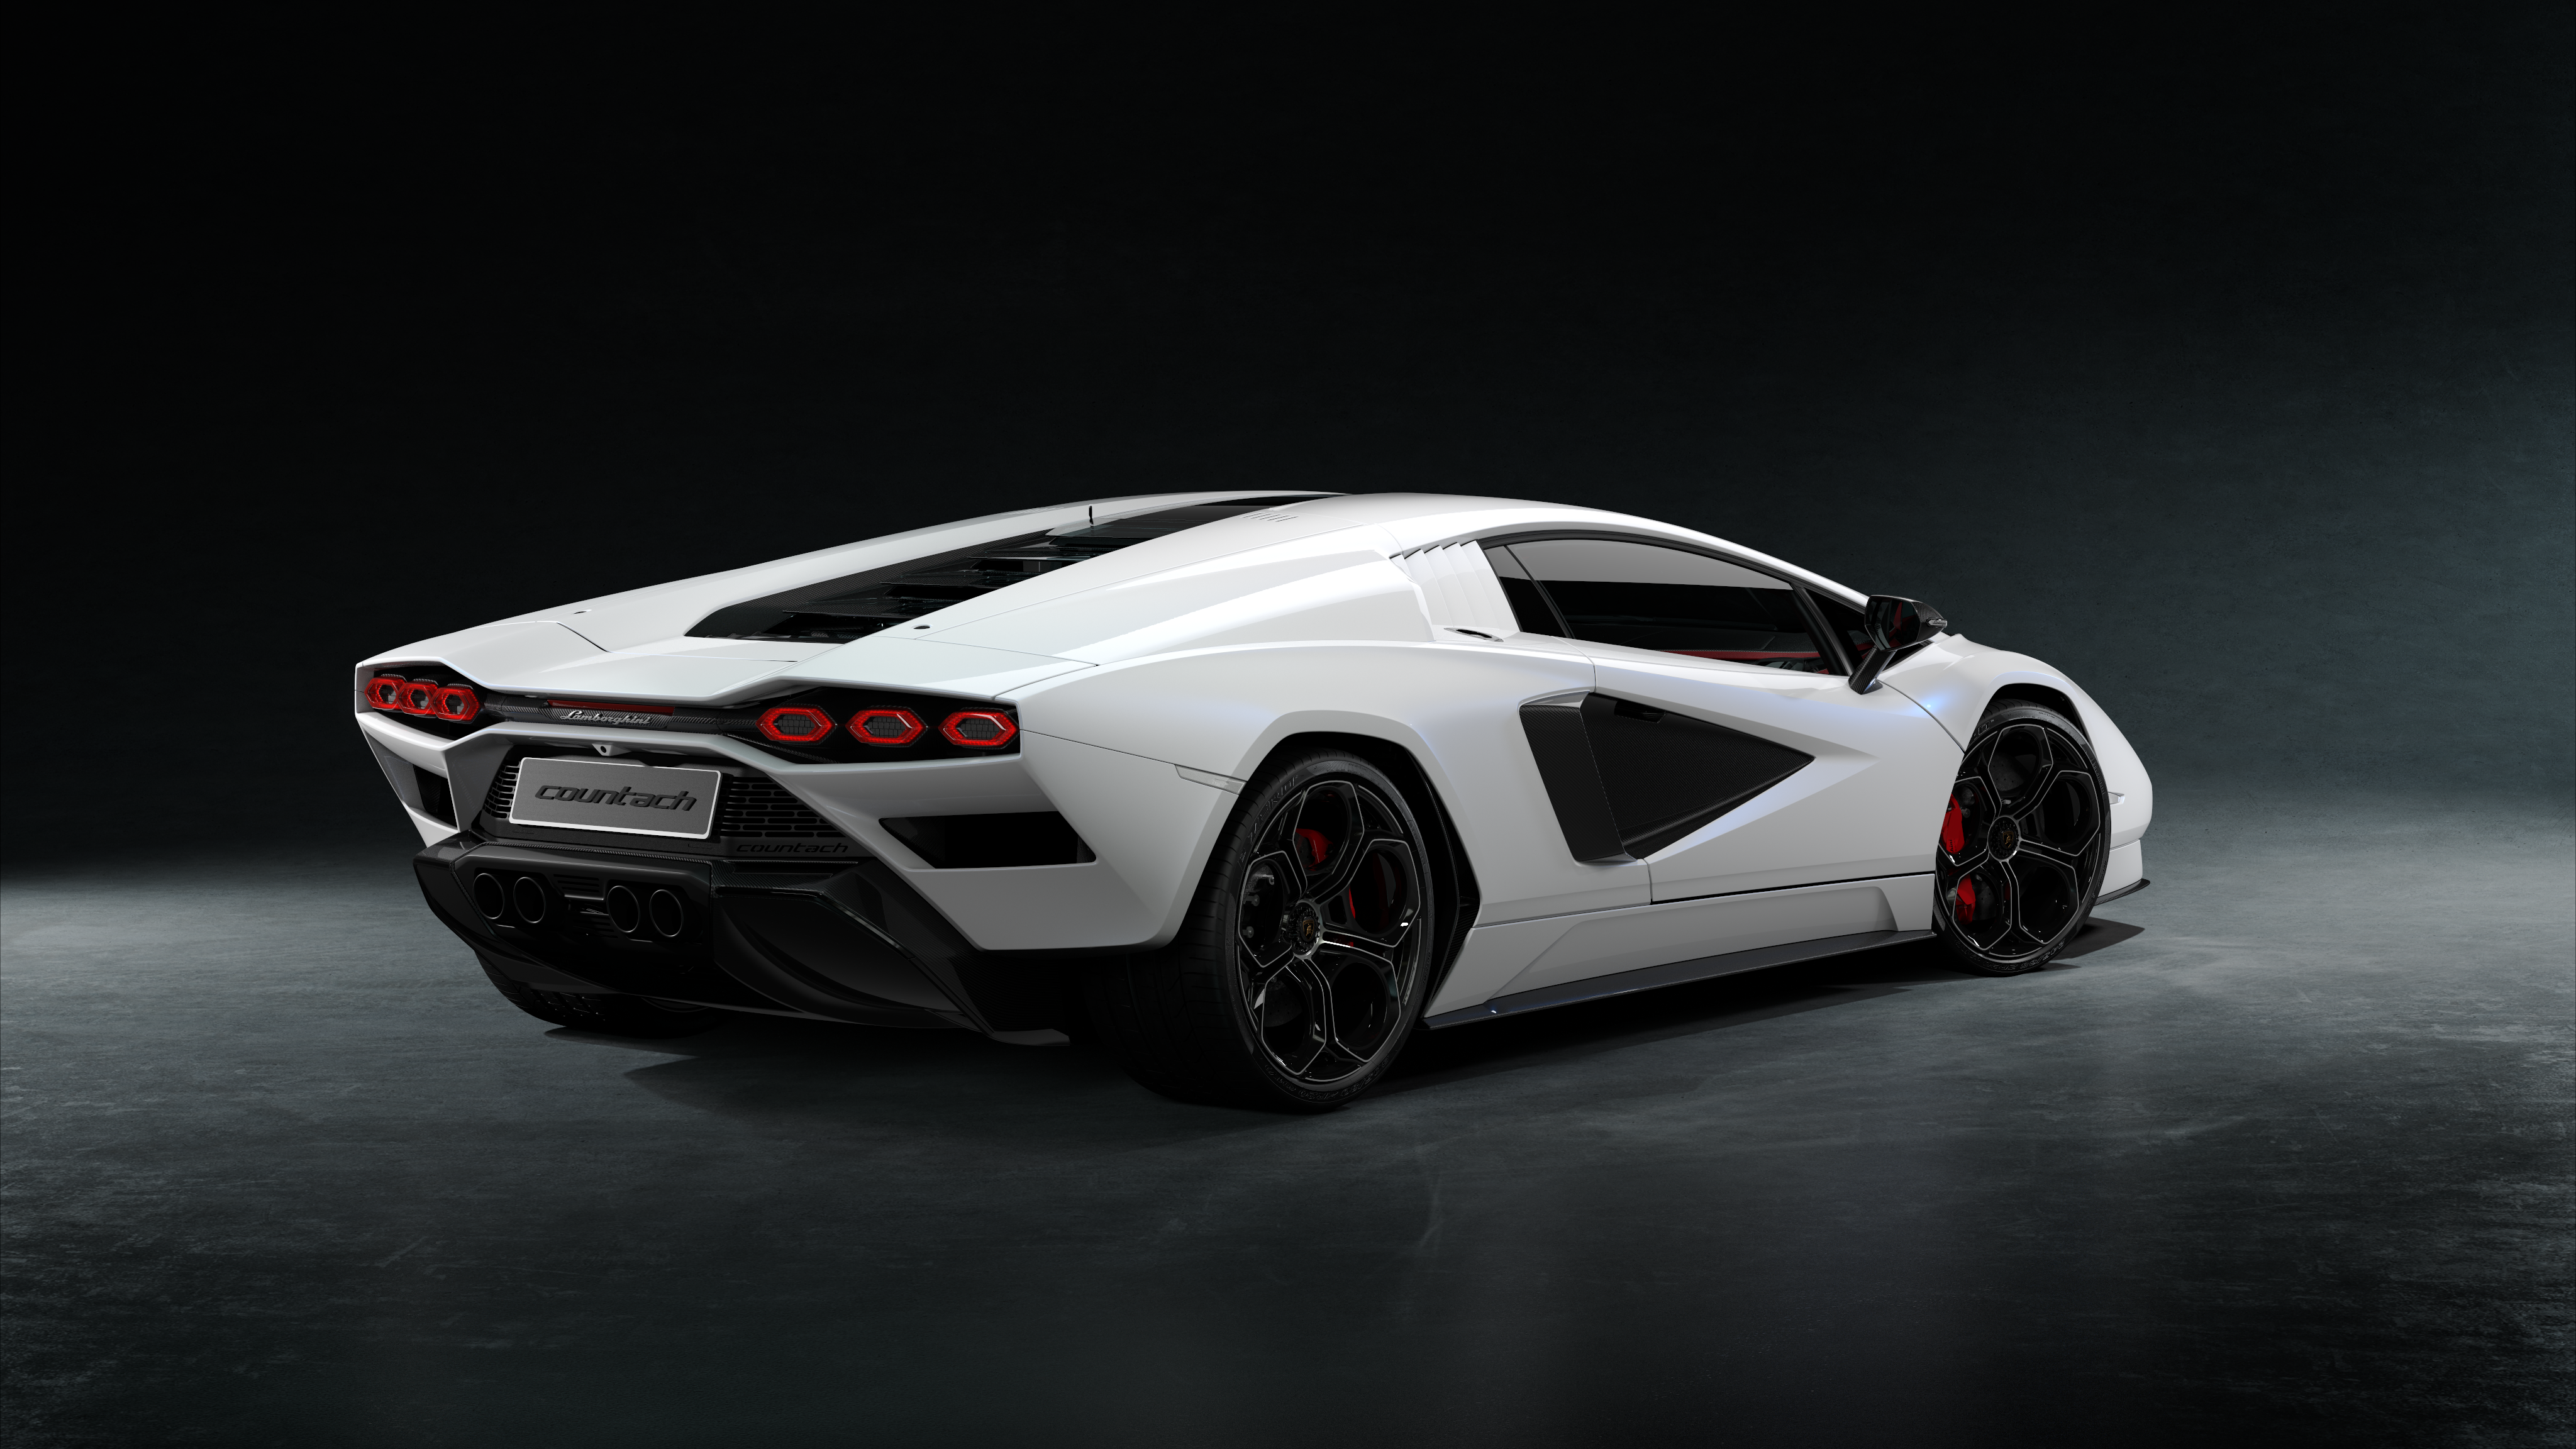 New $2.3 million Lamborghini Countach revealed to mark car's 50th